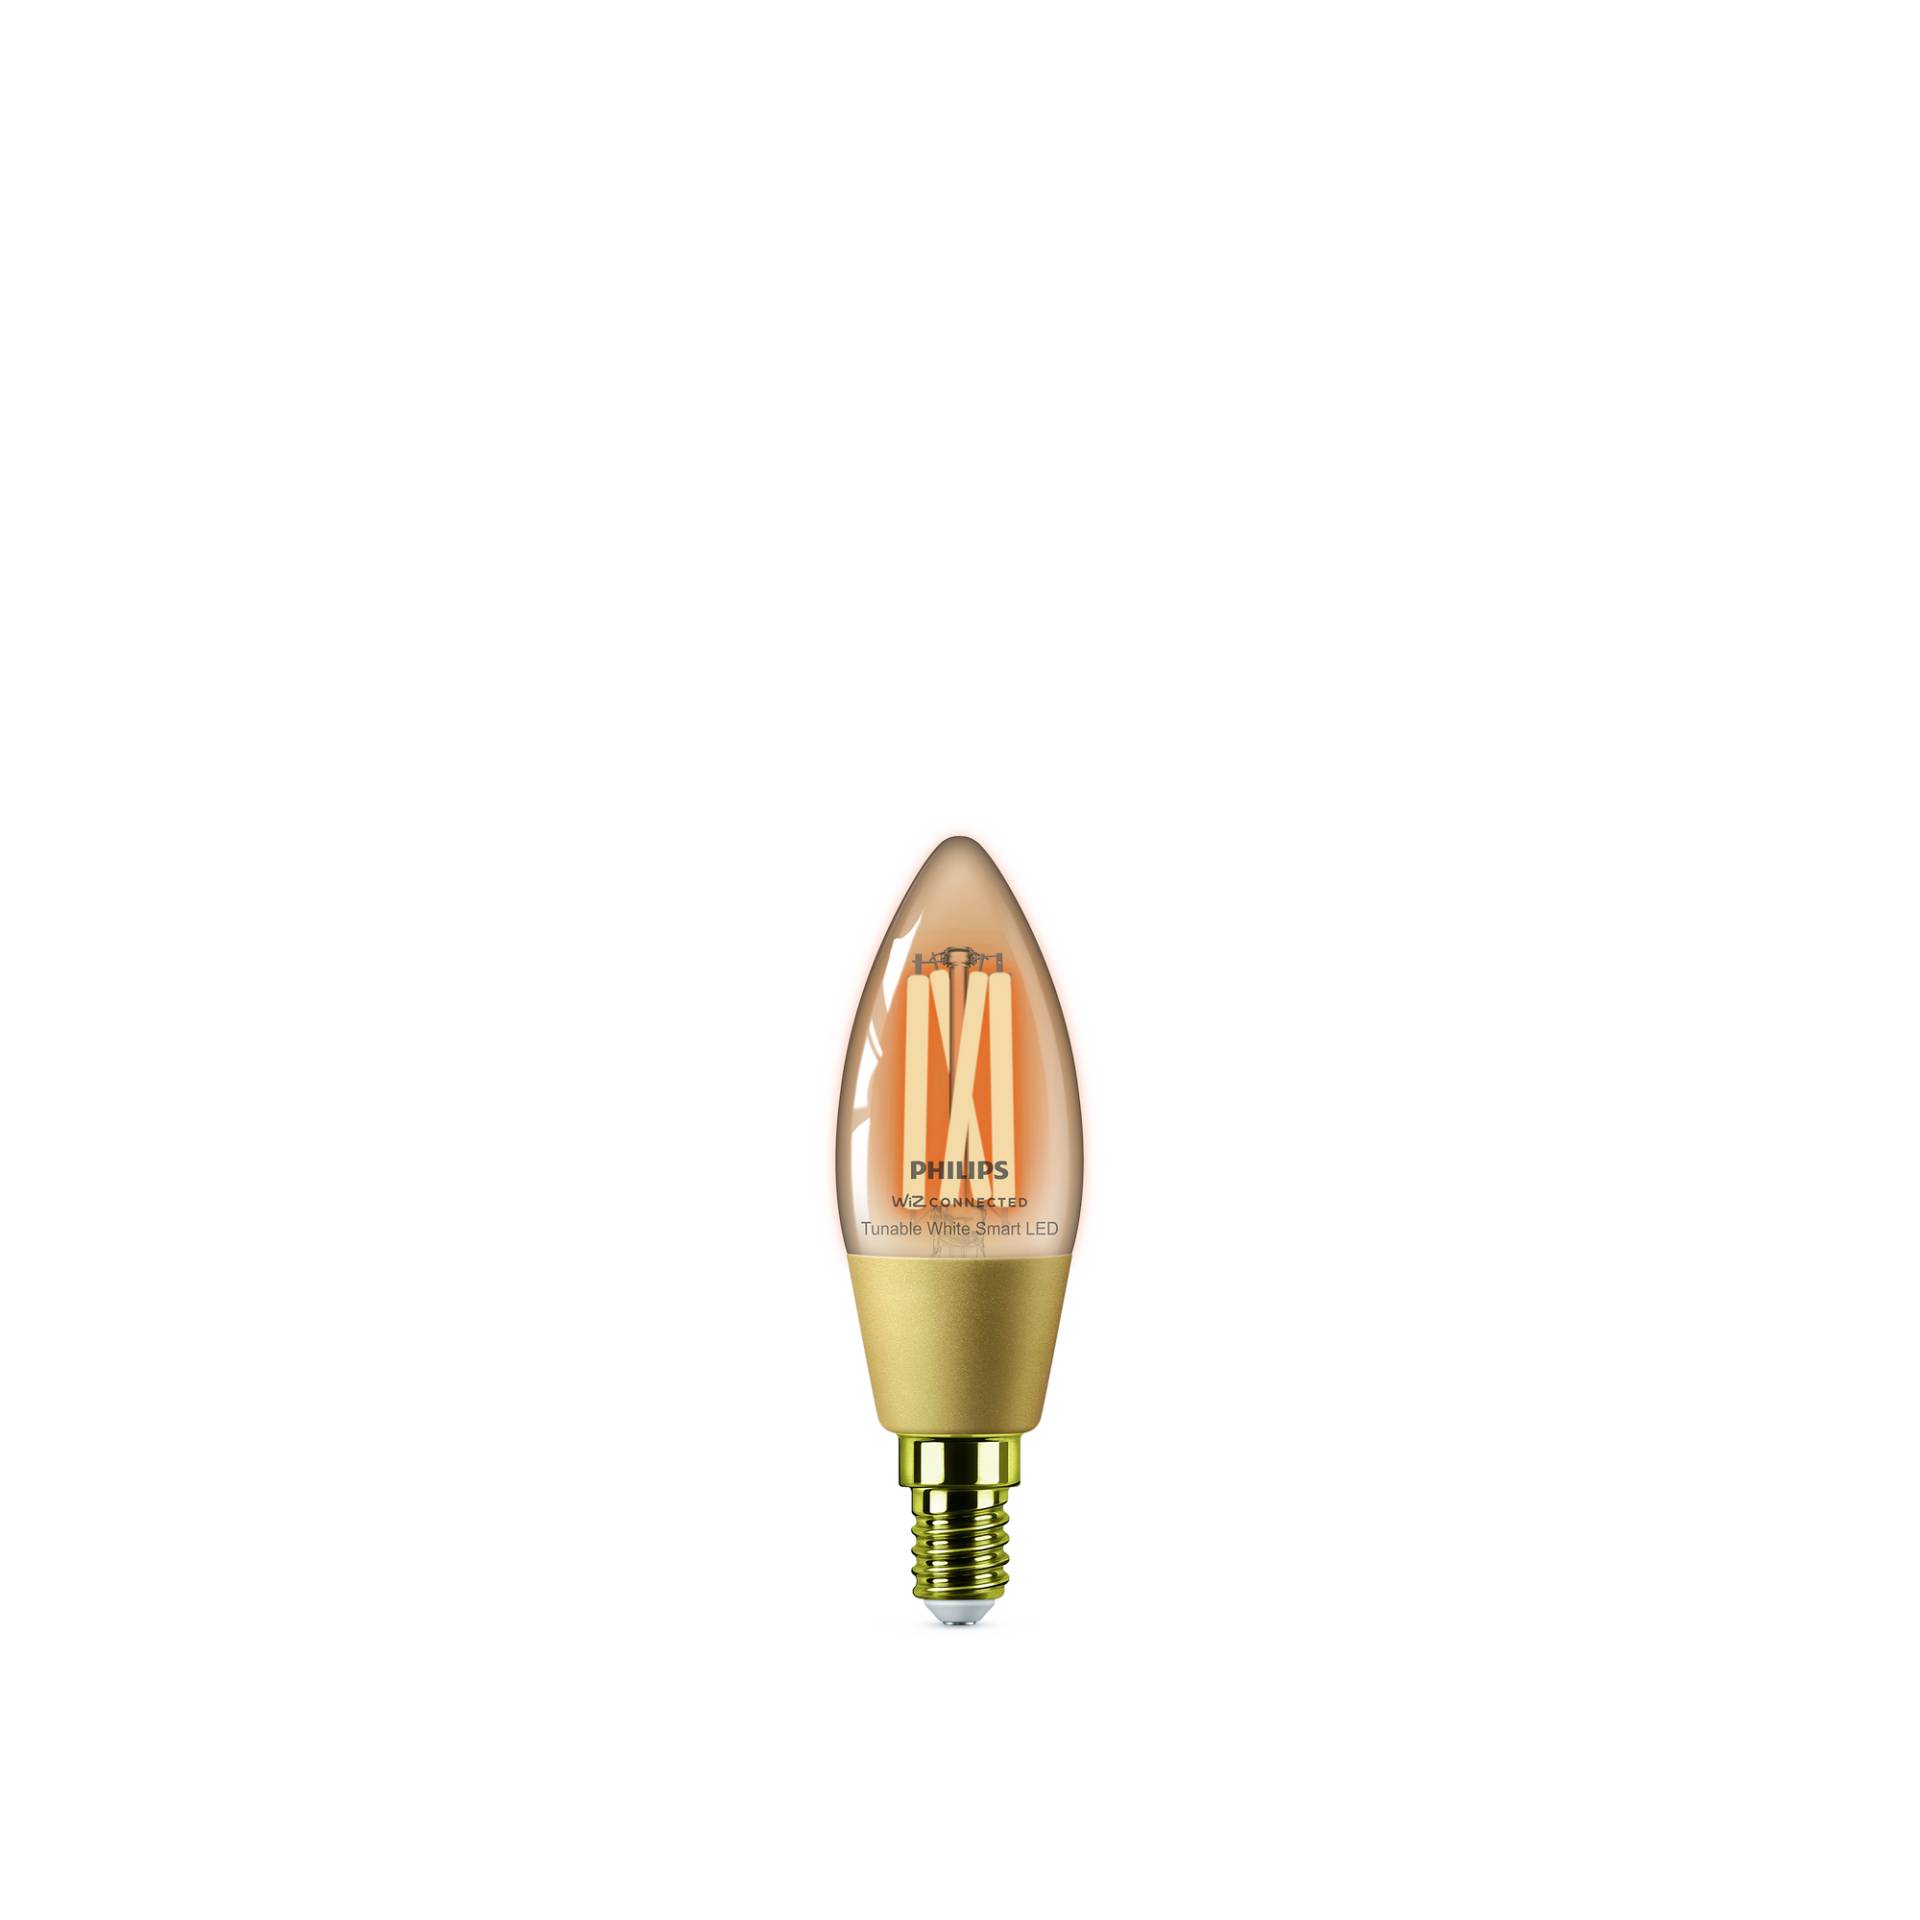 Philips LED-Filament-Lampe 'SmartLED' 370 lm E14 Kerze amber von Philips